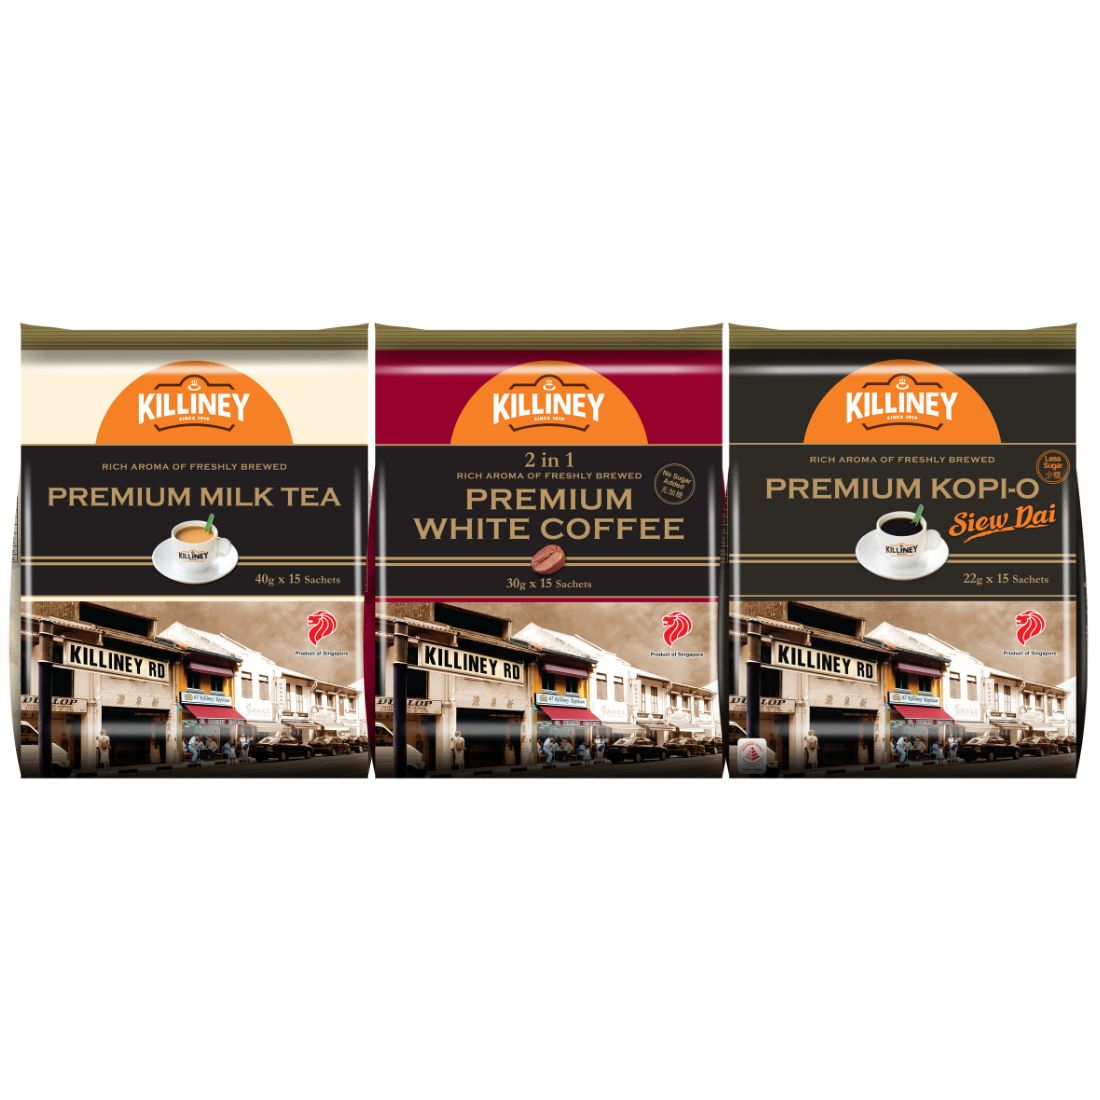 Kiliney [Bundle] 1x Killiney Premium Milk Tea + 1x Killiney Premium 2-in-1 White Coffee + 1x Killiney Premium Kopi-O Siew Dai